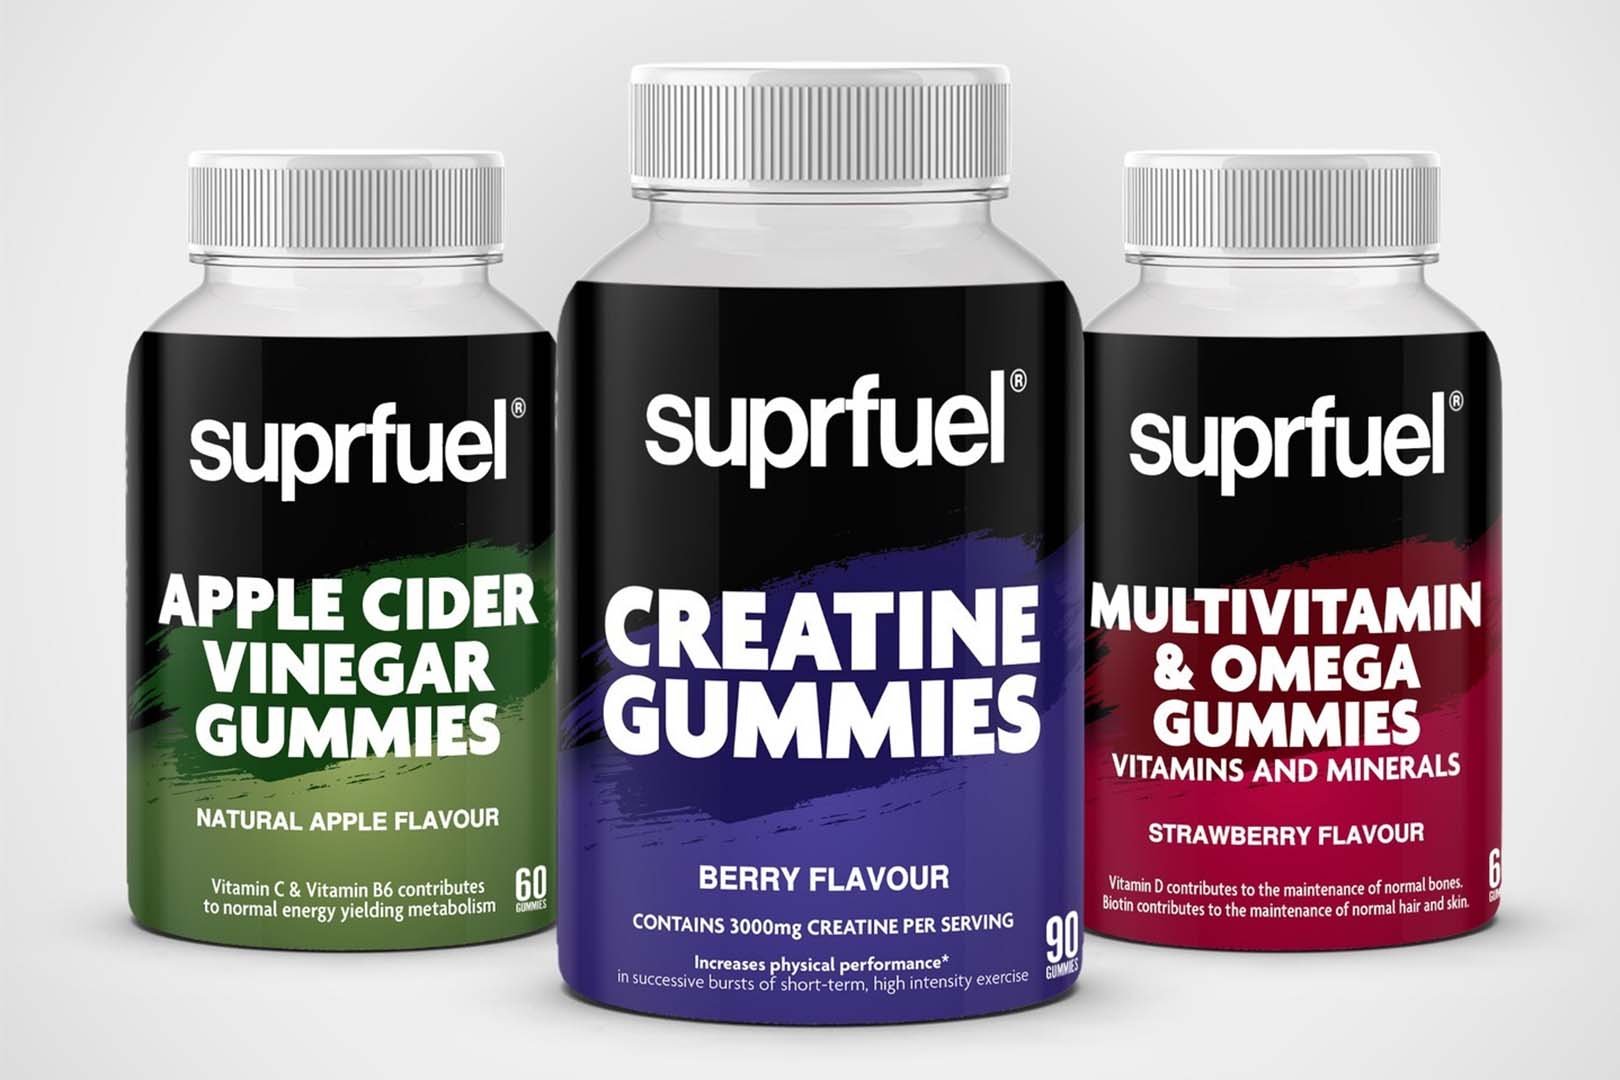 Suprfuel Gummy Supplements